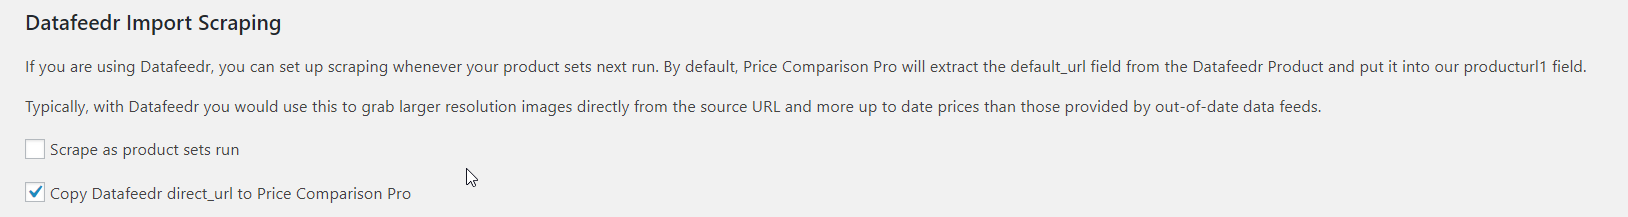 Datafeedr integration settings in Price Comparison Pro plugin